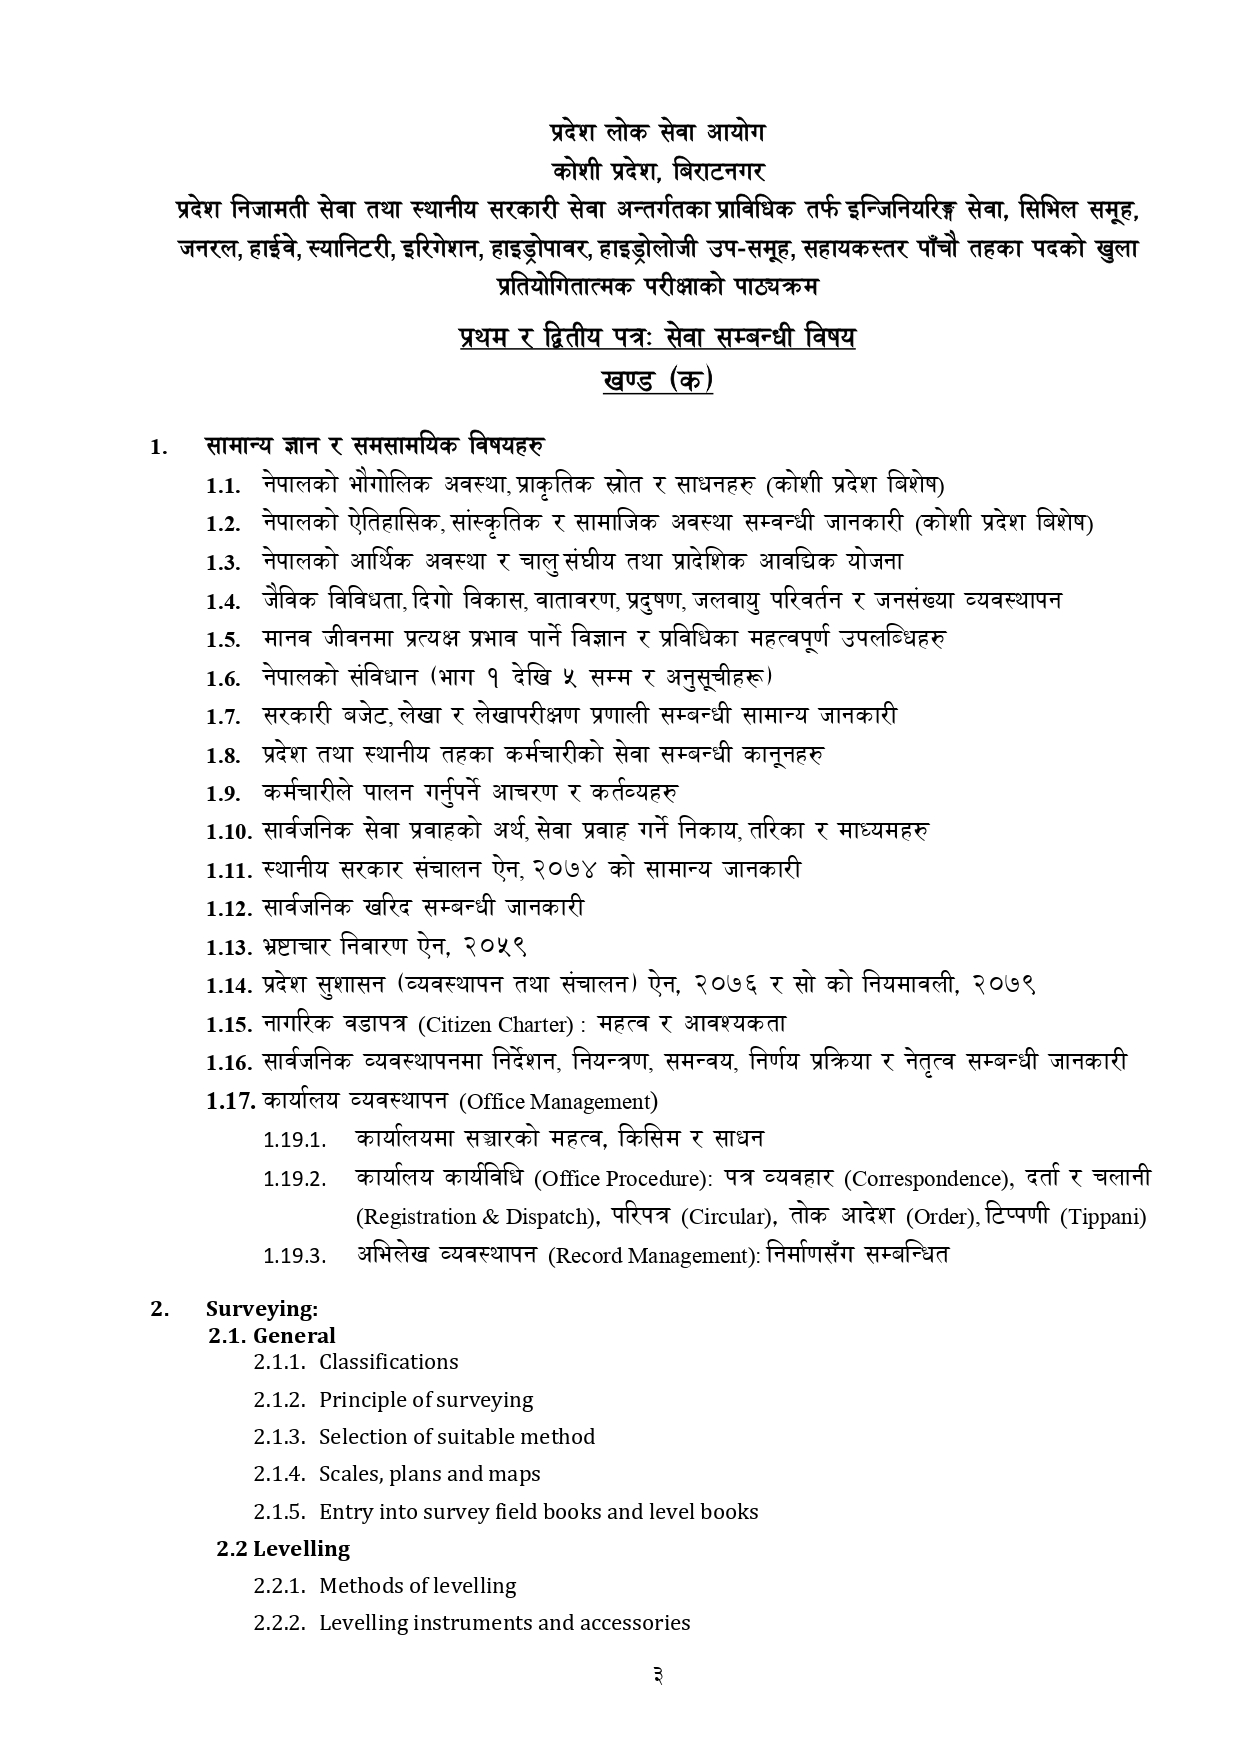 Koshi Pradesh Sub-Engineer Level 5 Technical Syllables कोशी प्रदेश प्राविधिक सब-ईन्जिनियर तह ५ पाठ्यक्रम